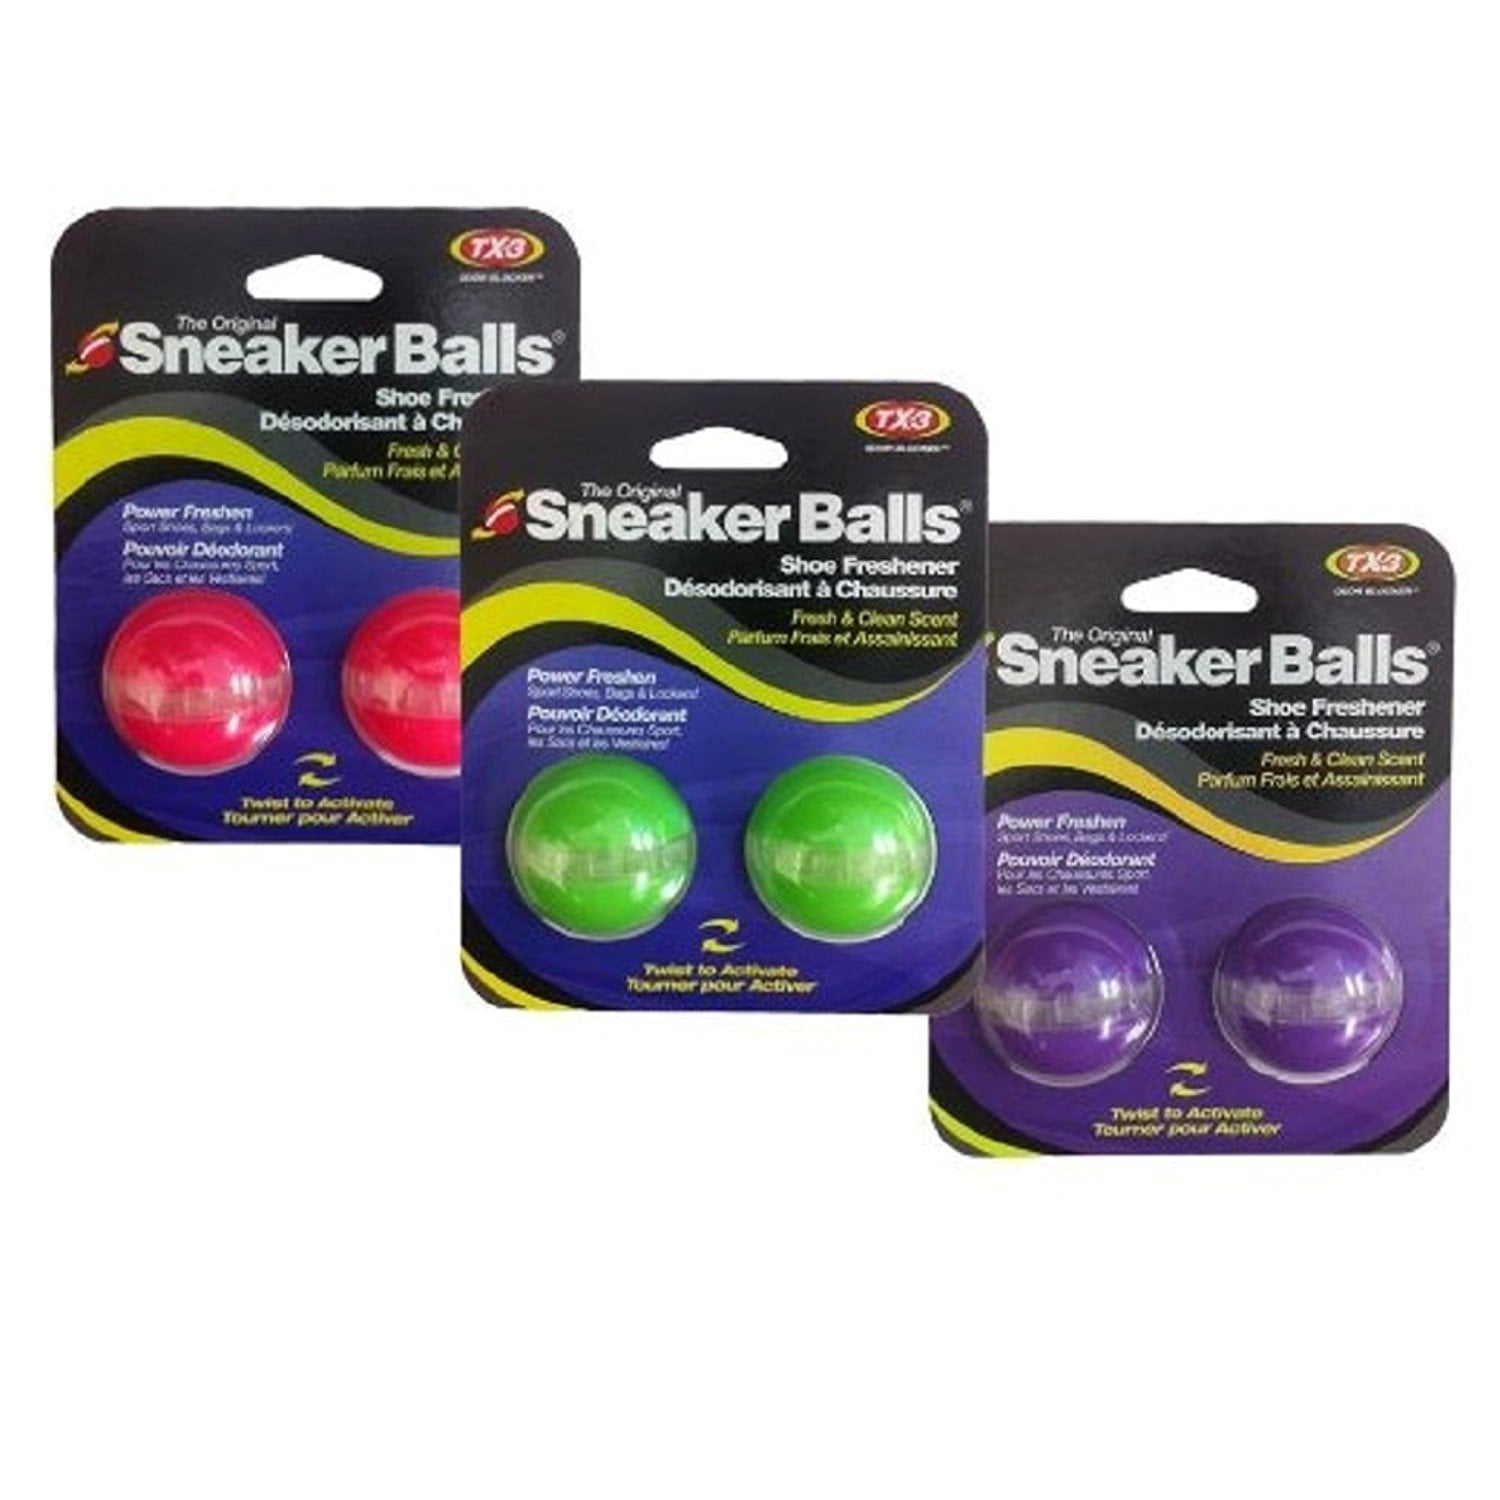 Sneaker Balls Original TX-3 Odor 